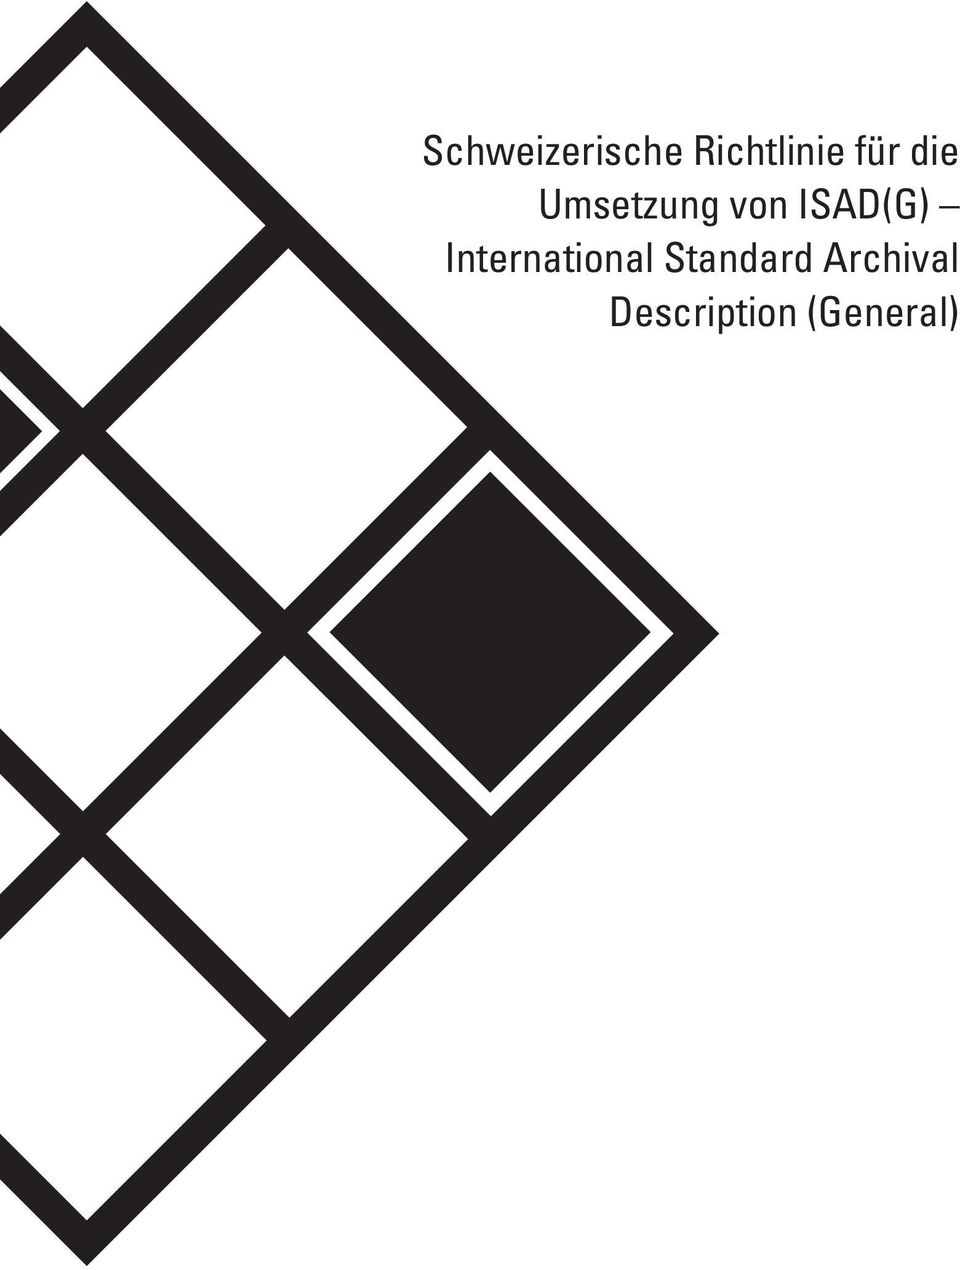 ISAD(G) International